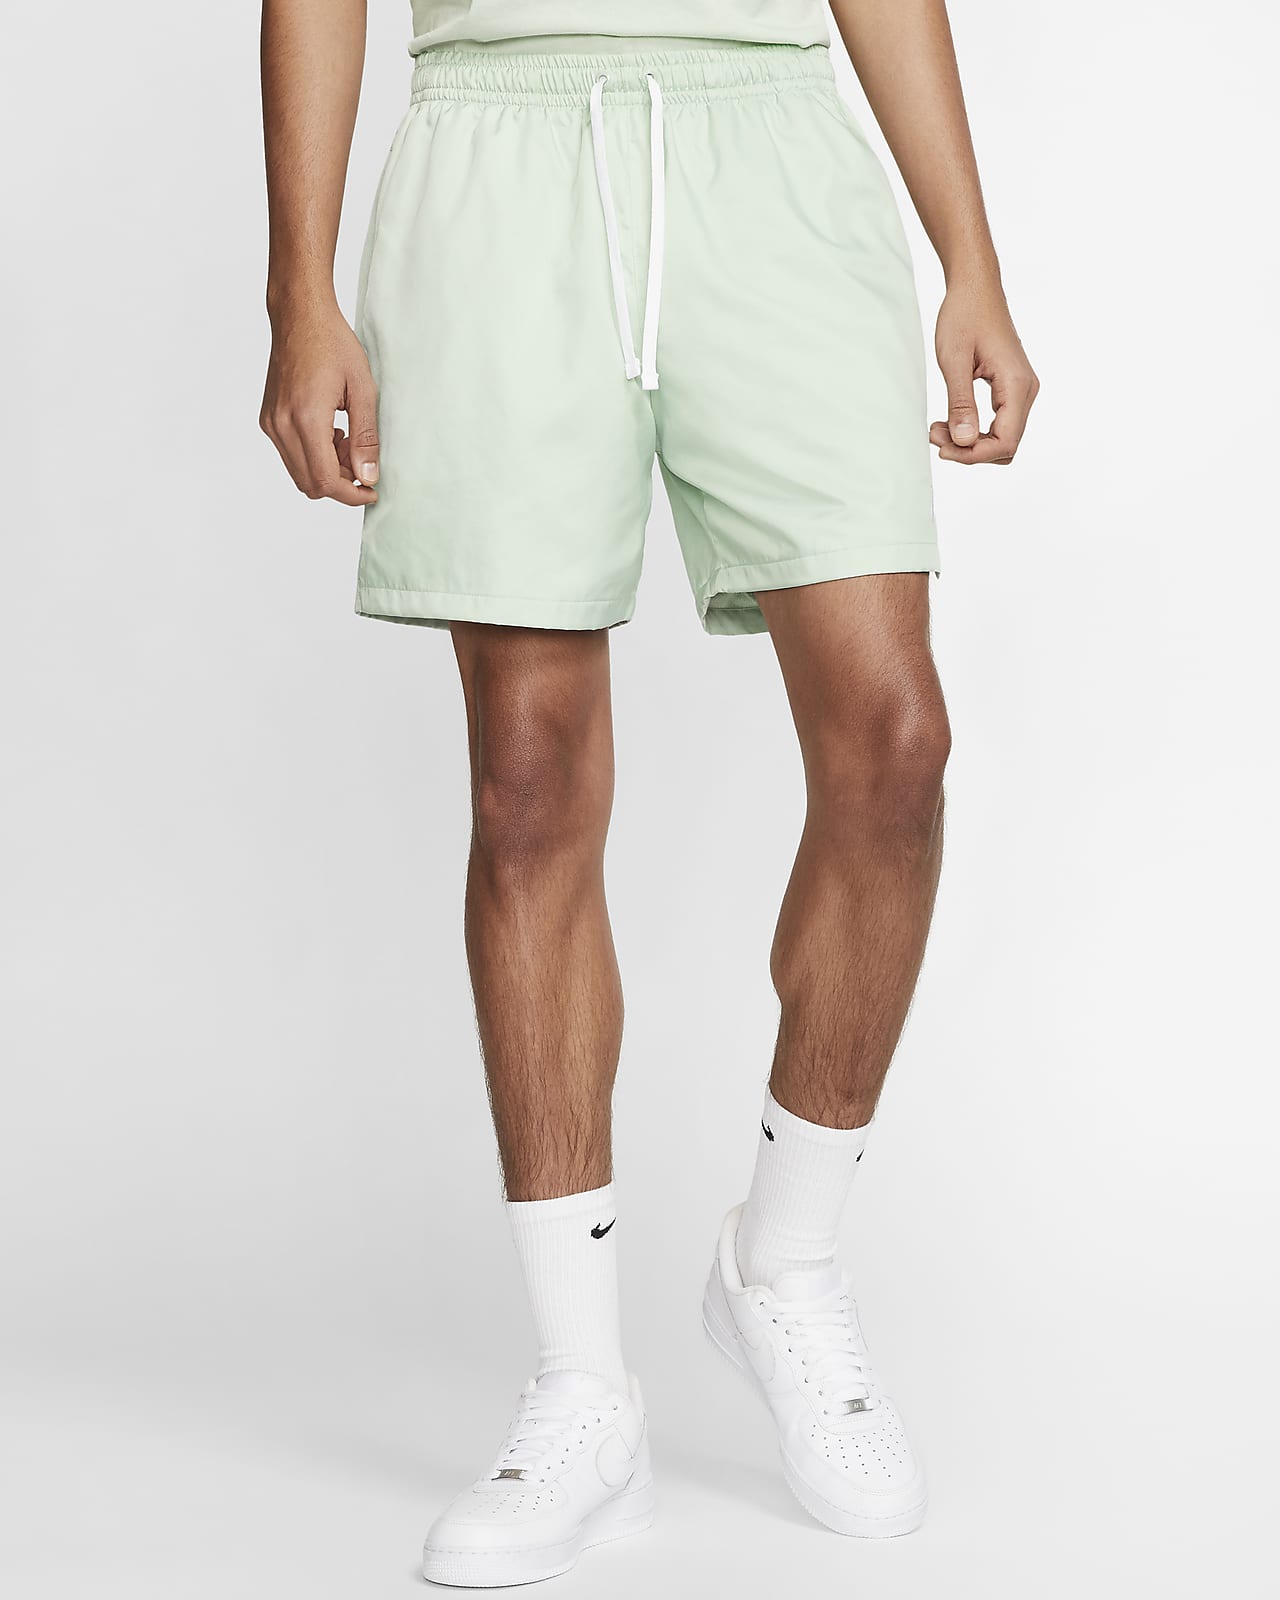 nike sportswear mens shorts